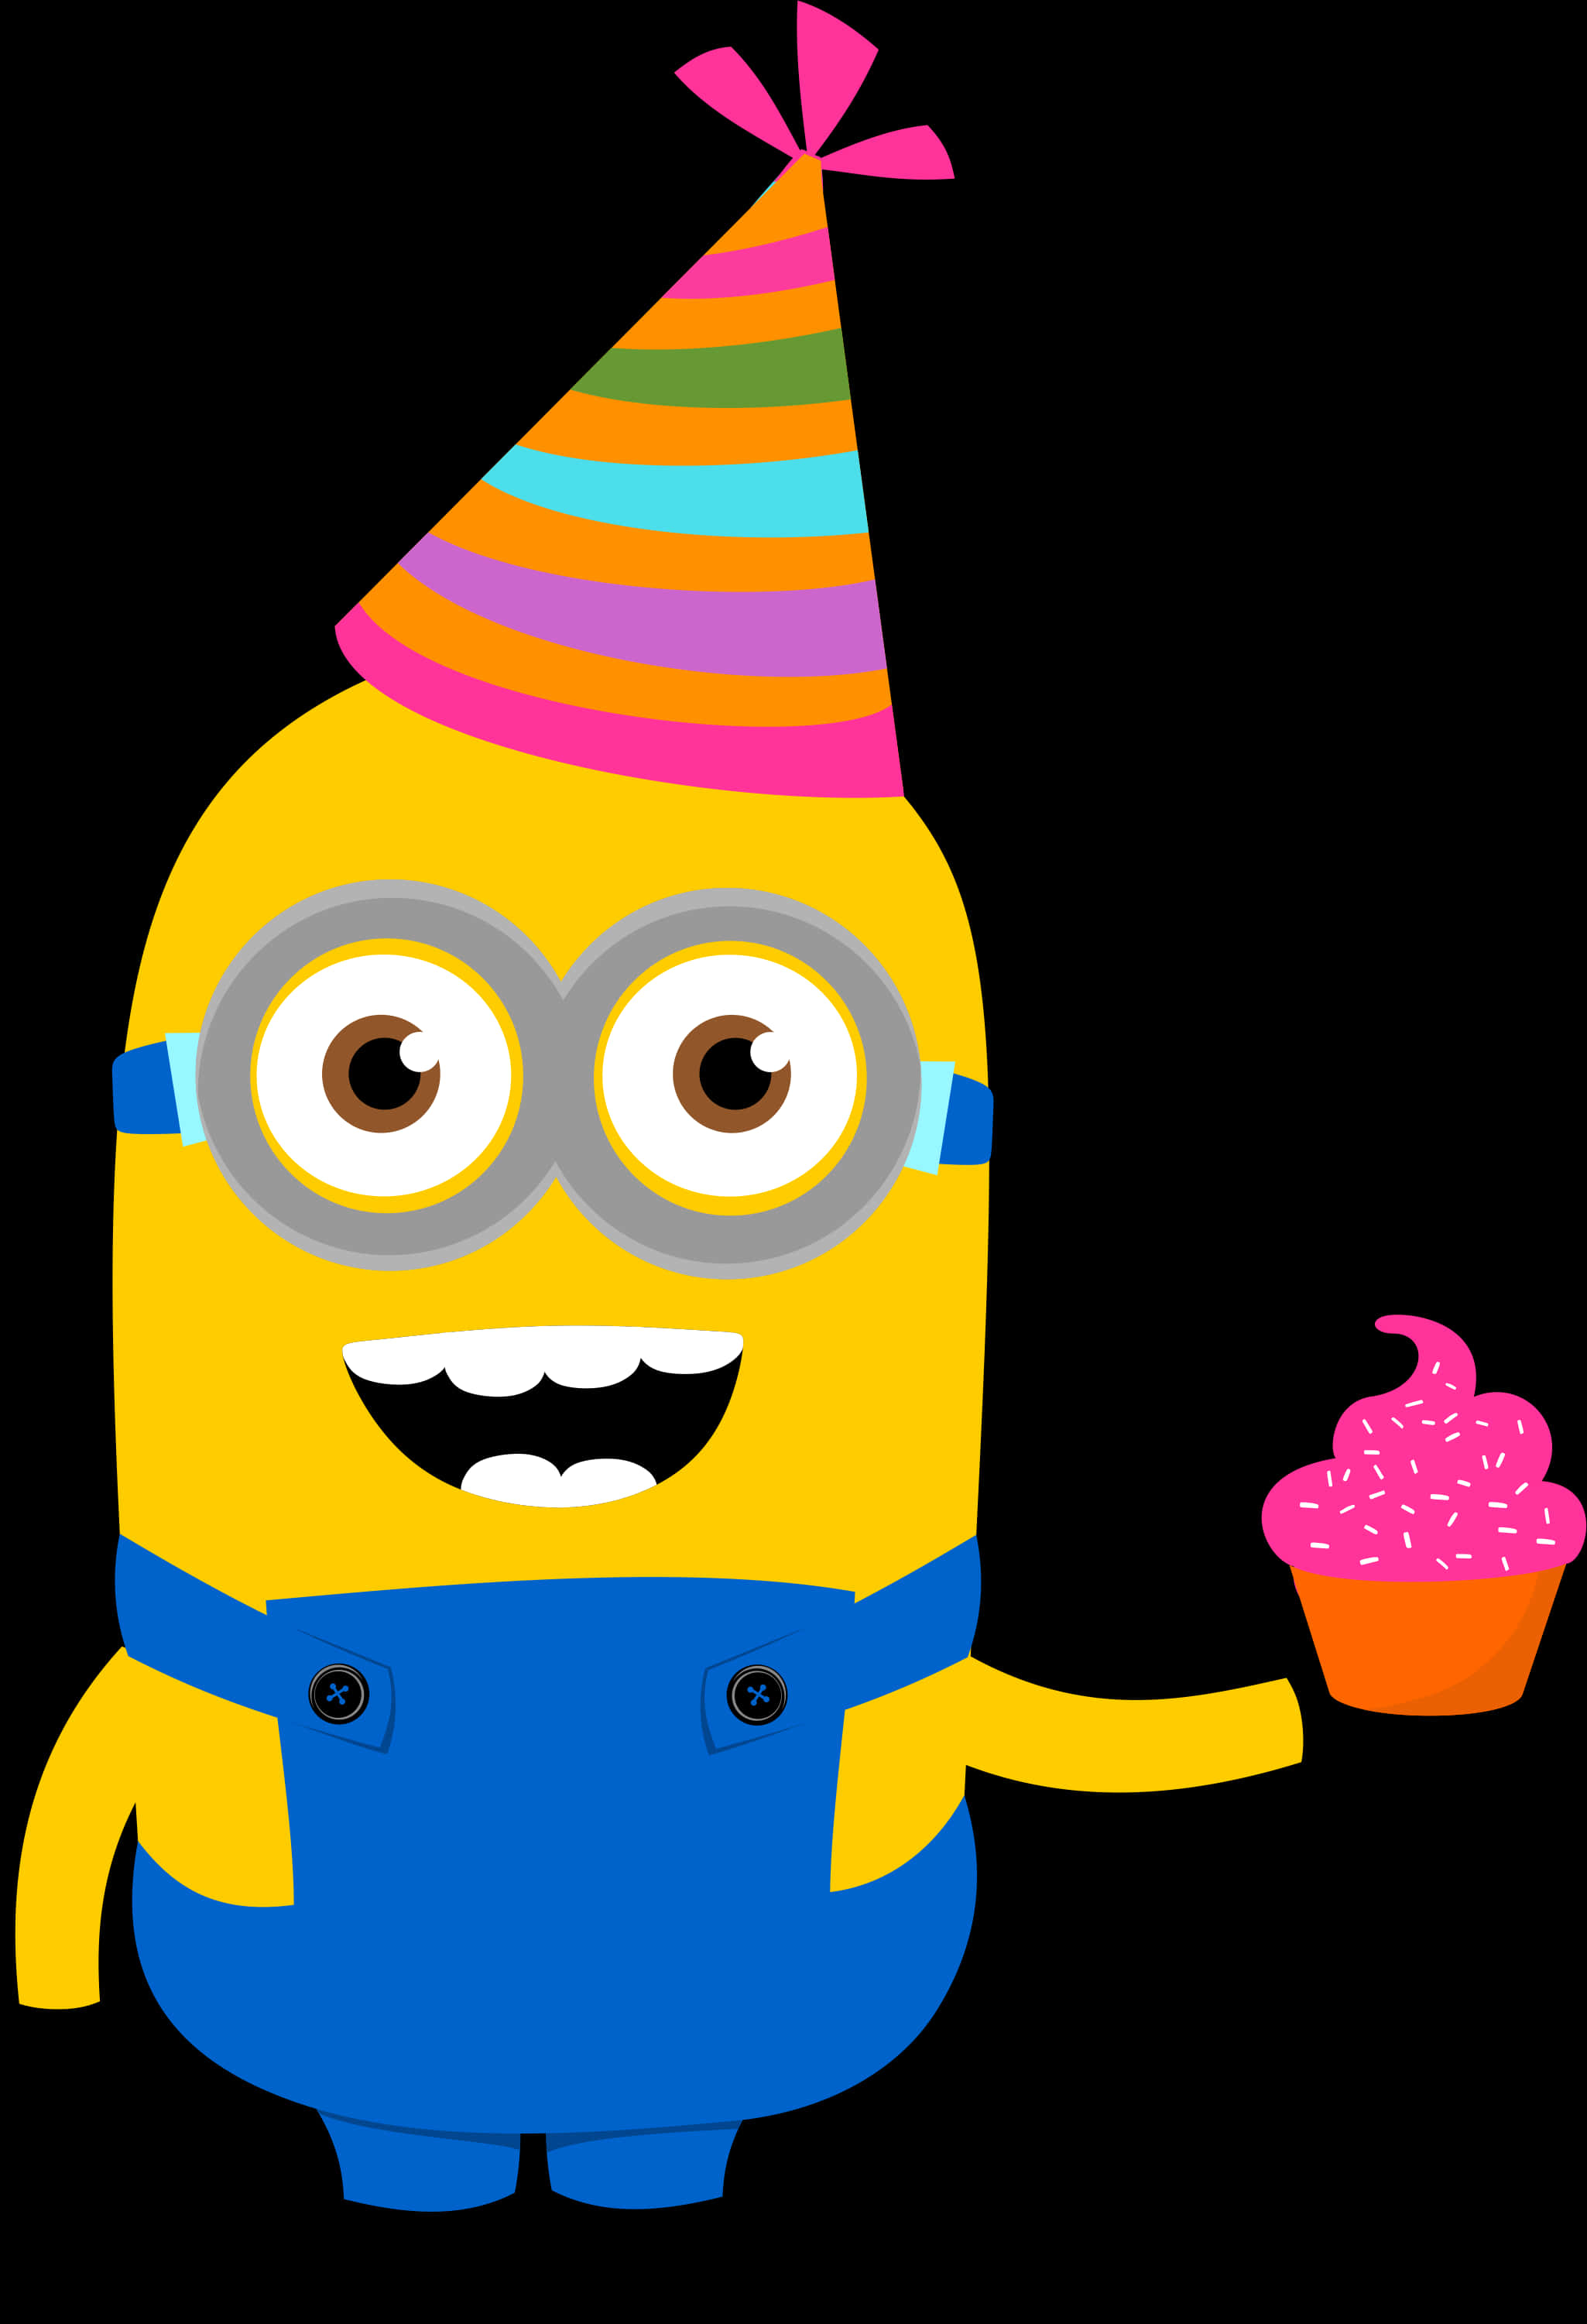 A Cartoon Character Holding A Cupcake